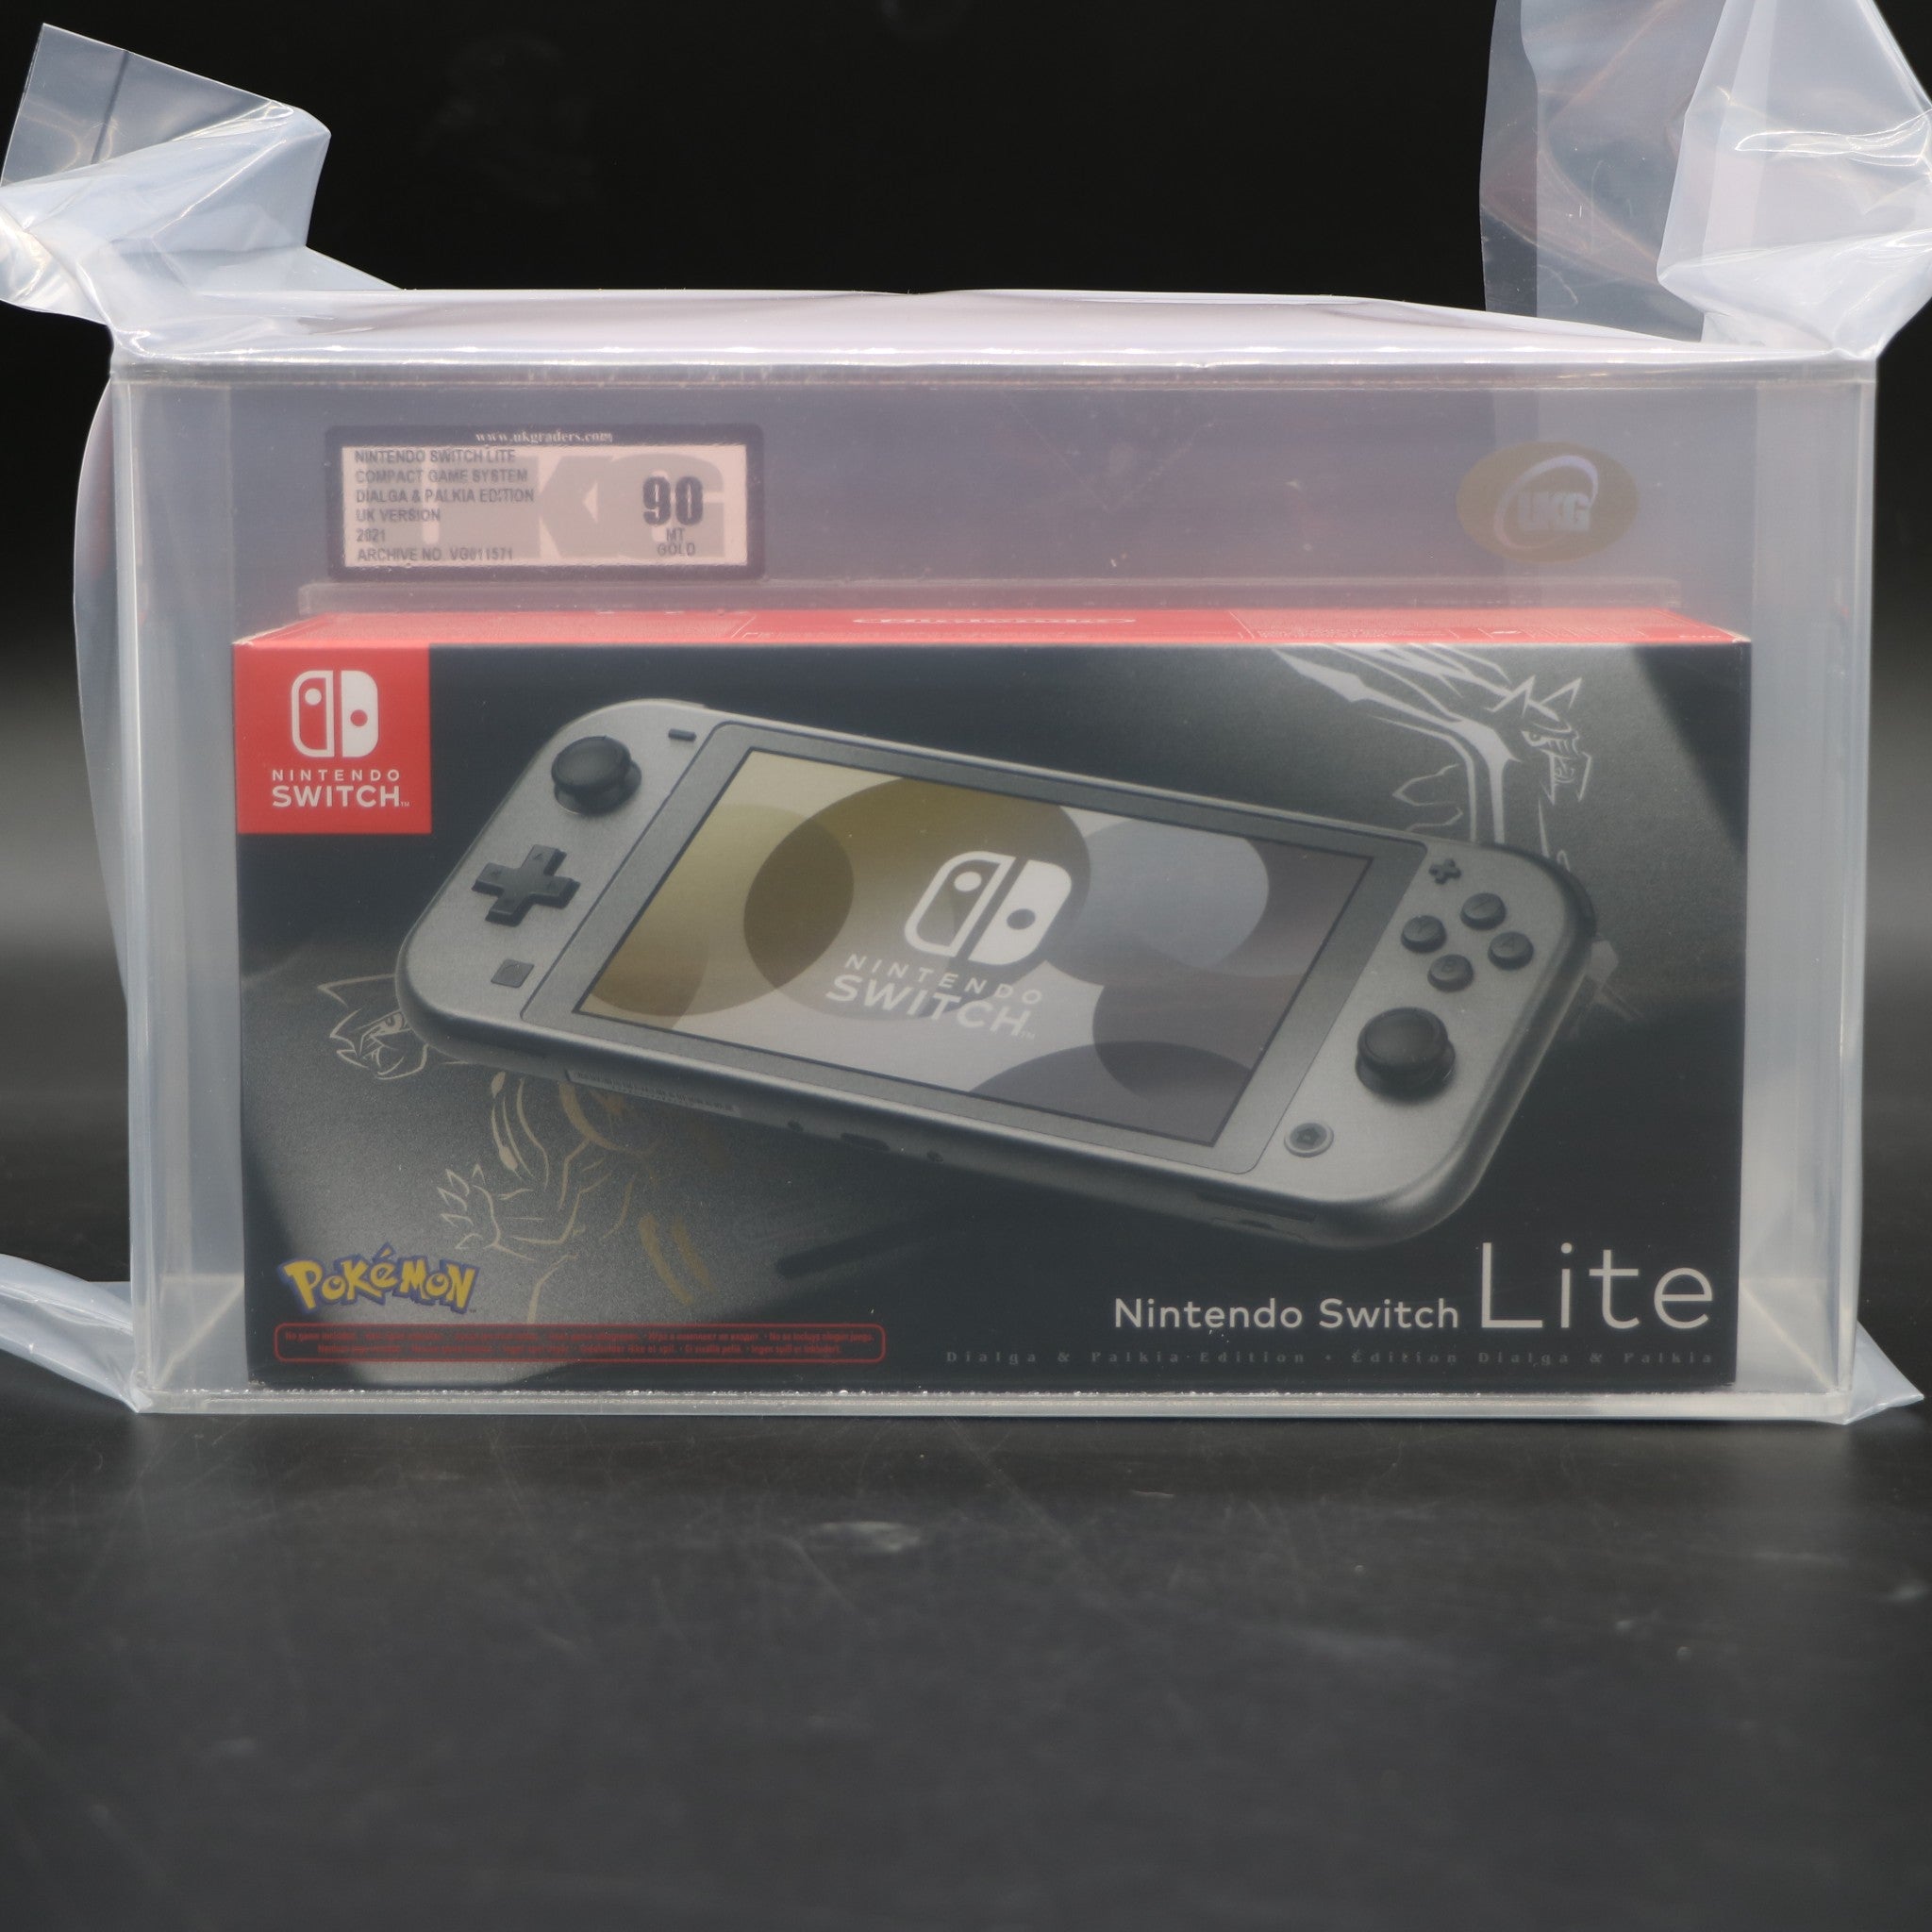 Nintendo Switch Pokemon Dialga & Palkia Edition Console | PAL | UKG 90 Mint Gold